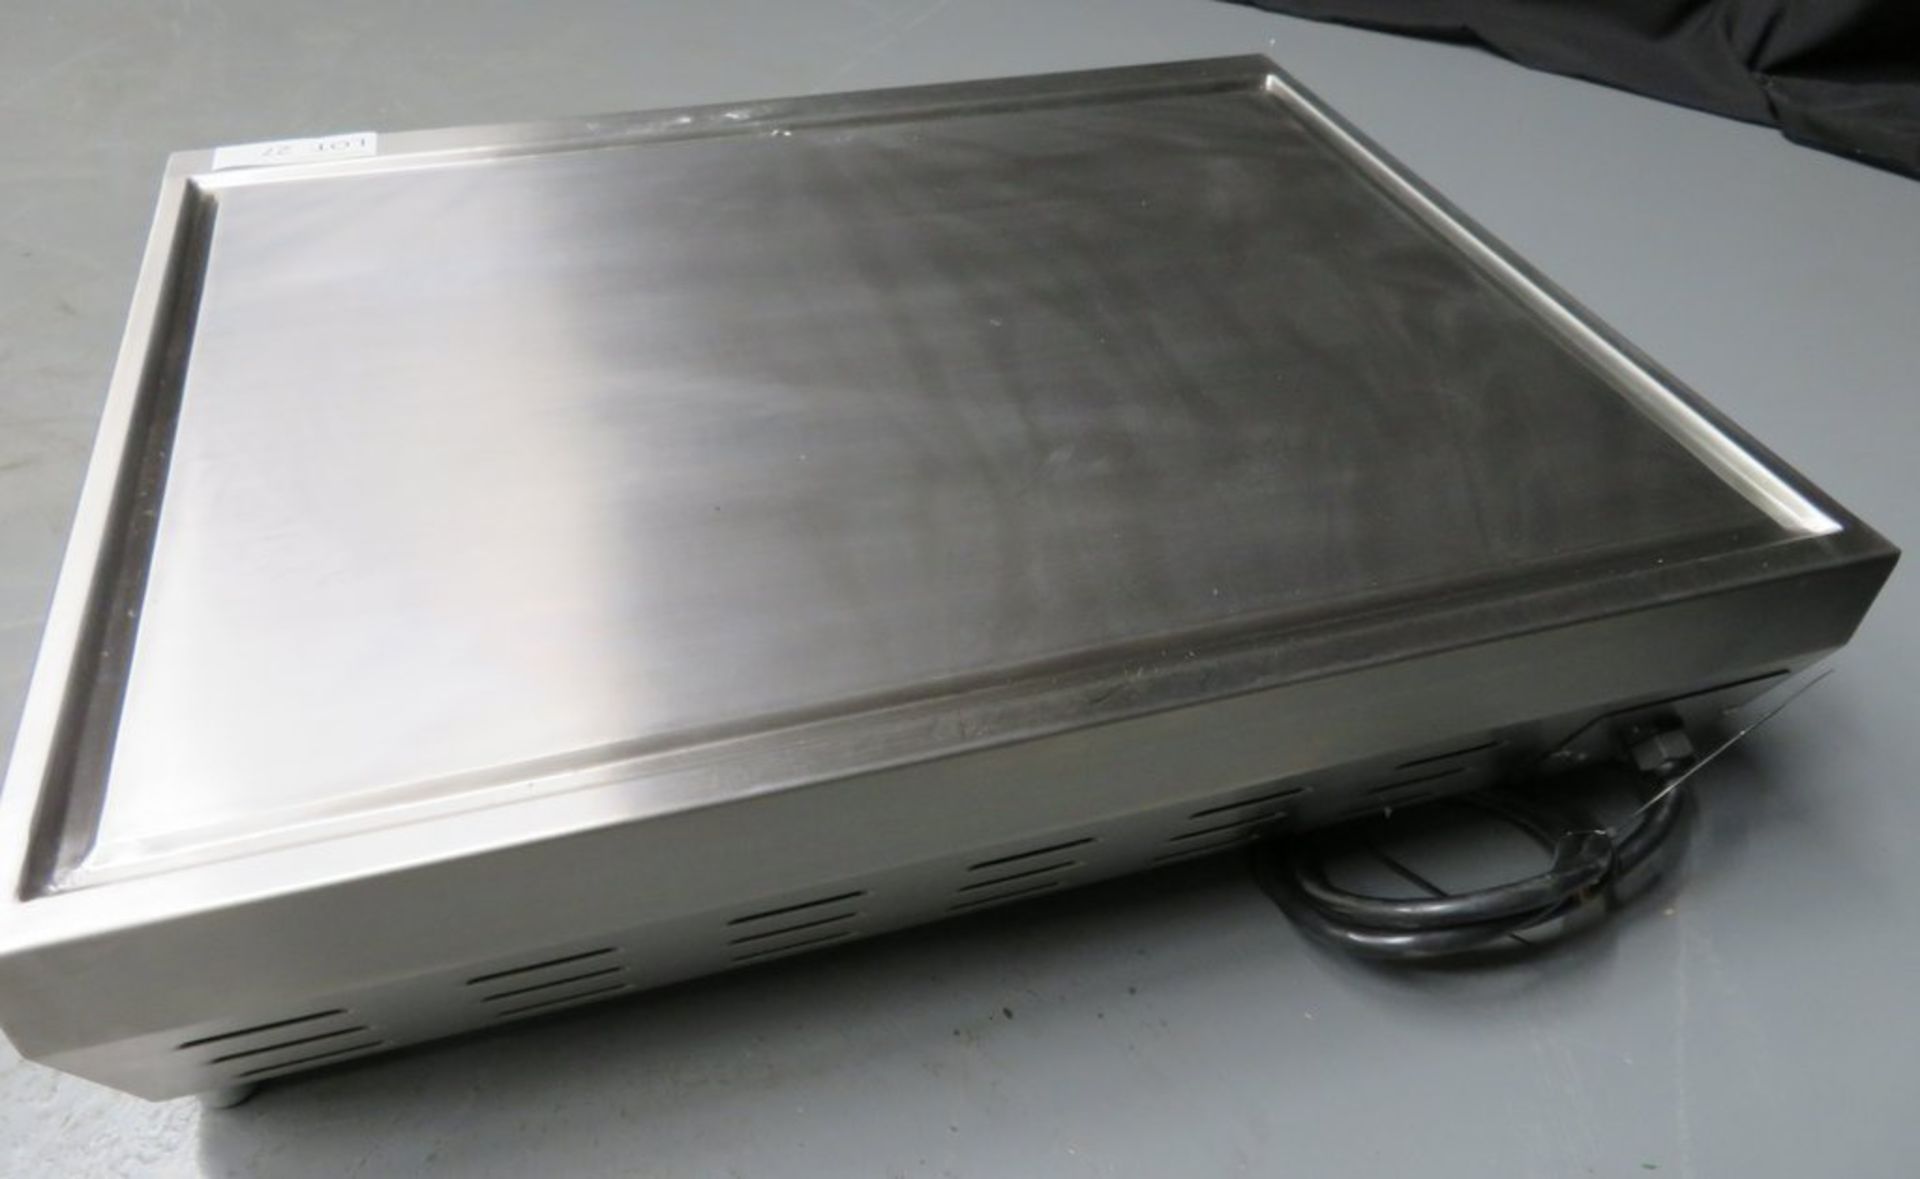 SemiPro countertop induction Teppanyaki, model RMBSTIFT70,1 phase - Image 6 of 7